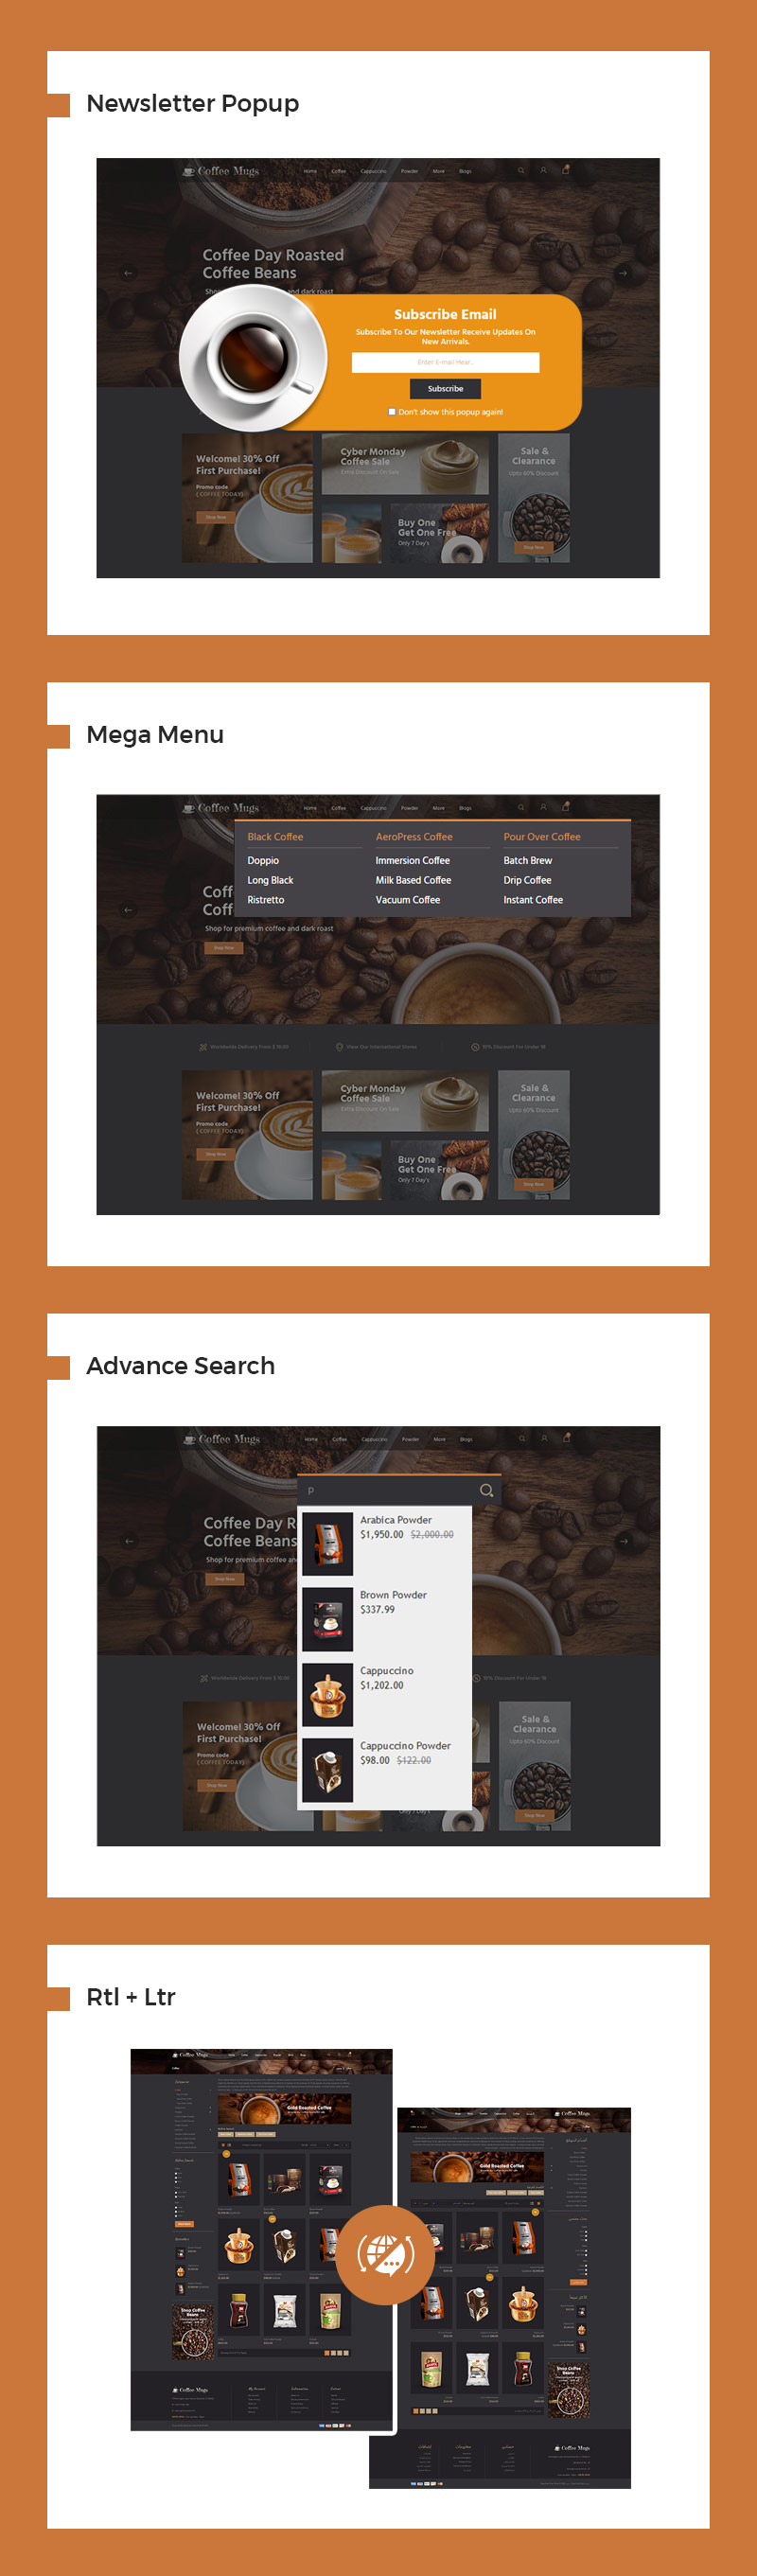 coffeemug-features-2.jpg